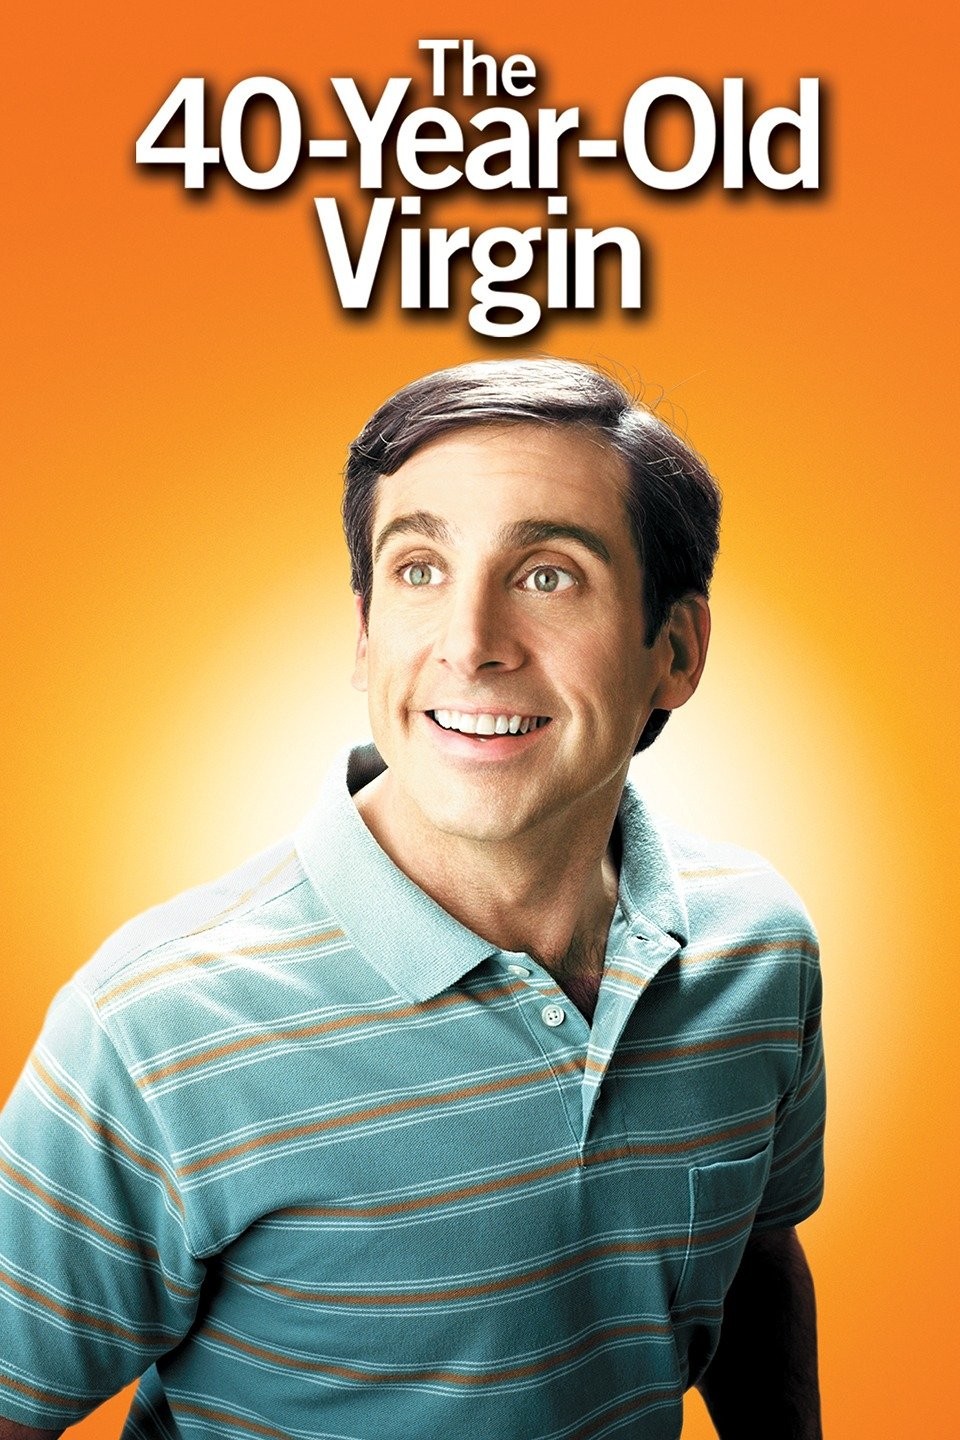 Vergingirlsex - The 40-Year-Old Virgin | Rotten Tomatoes